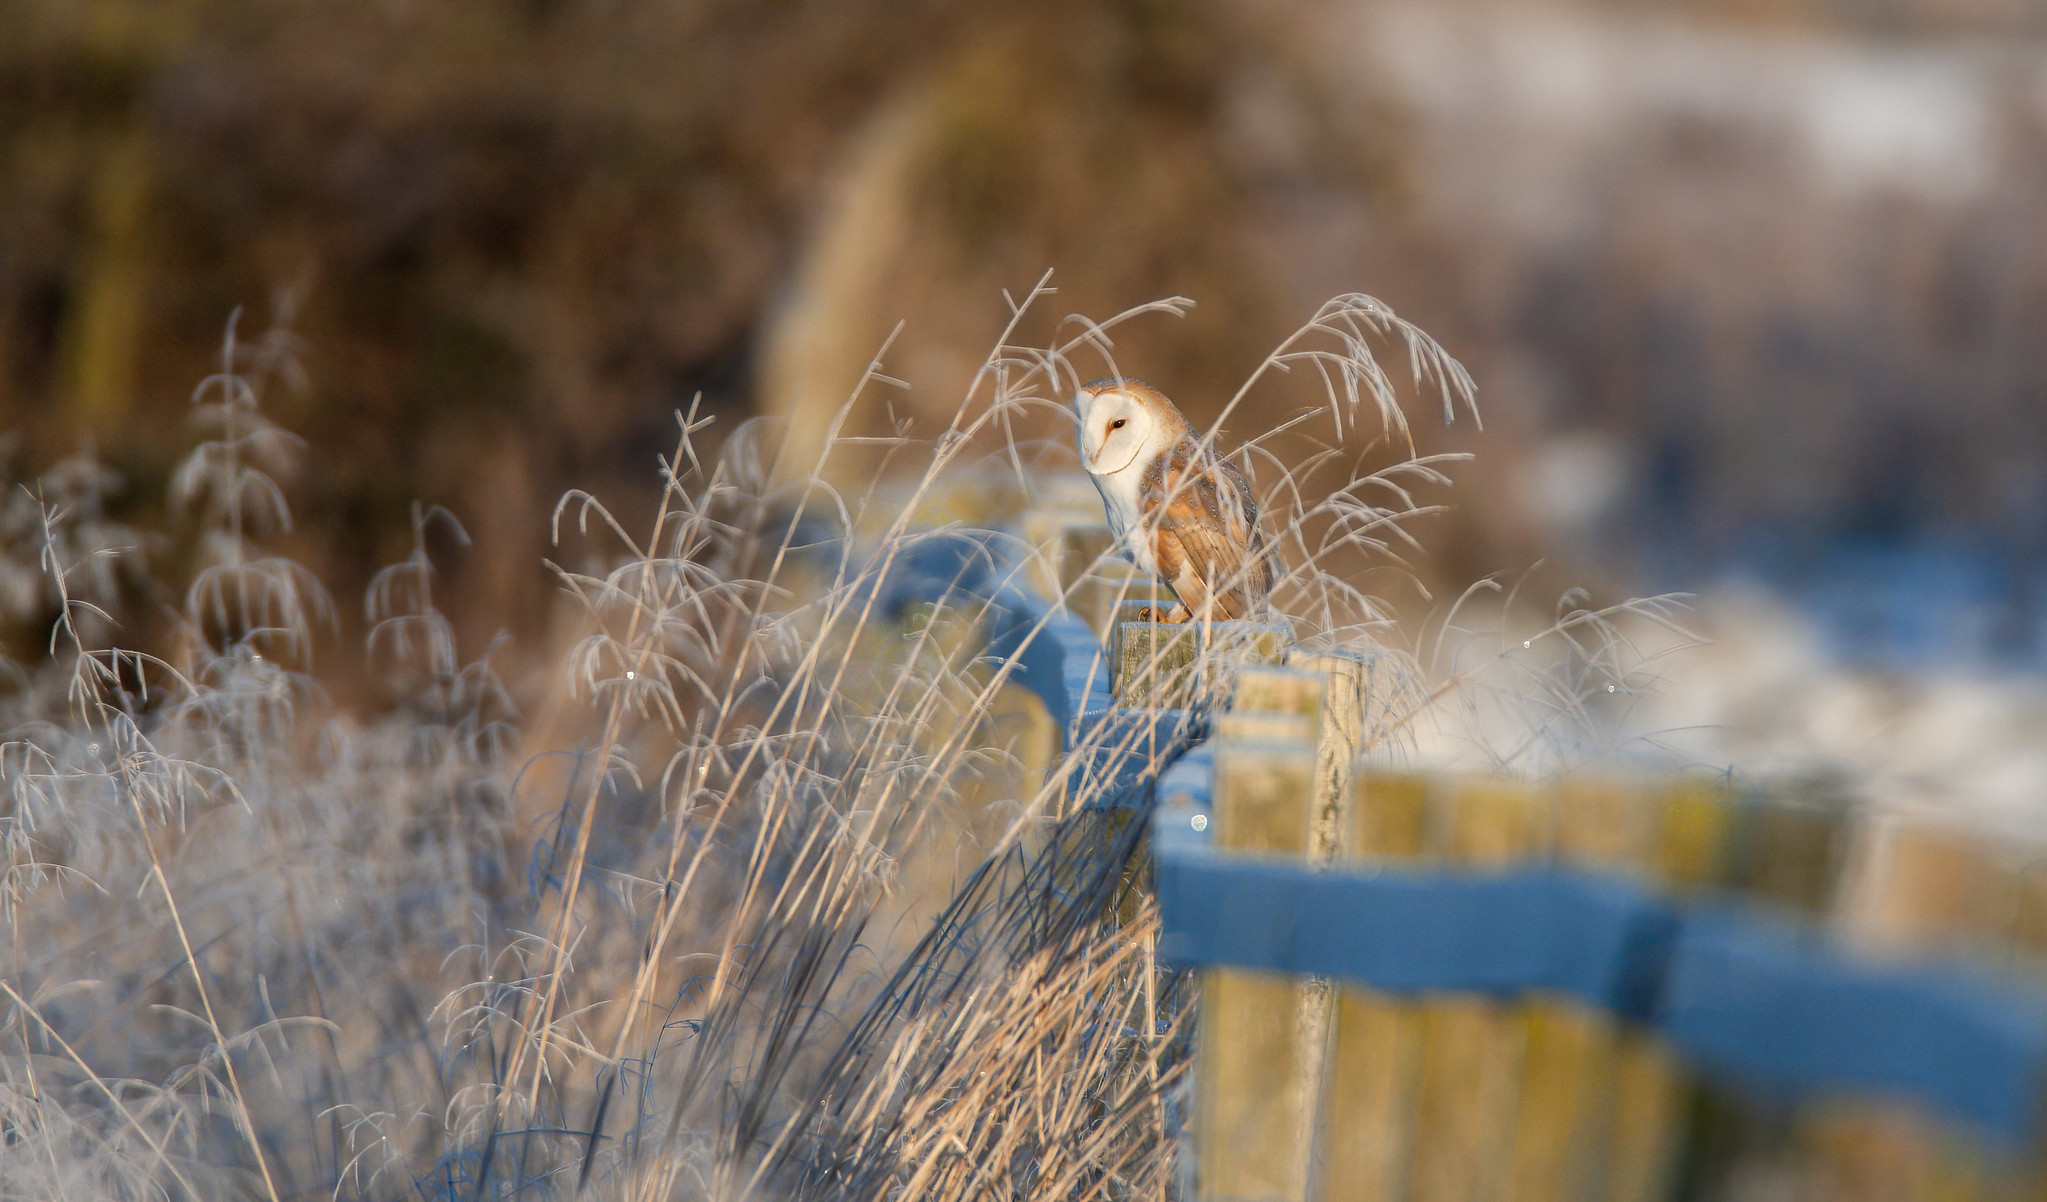 Barn Owl feeding - reprocessed from 2010